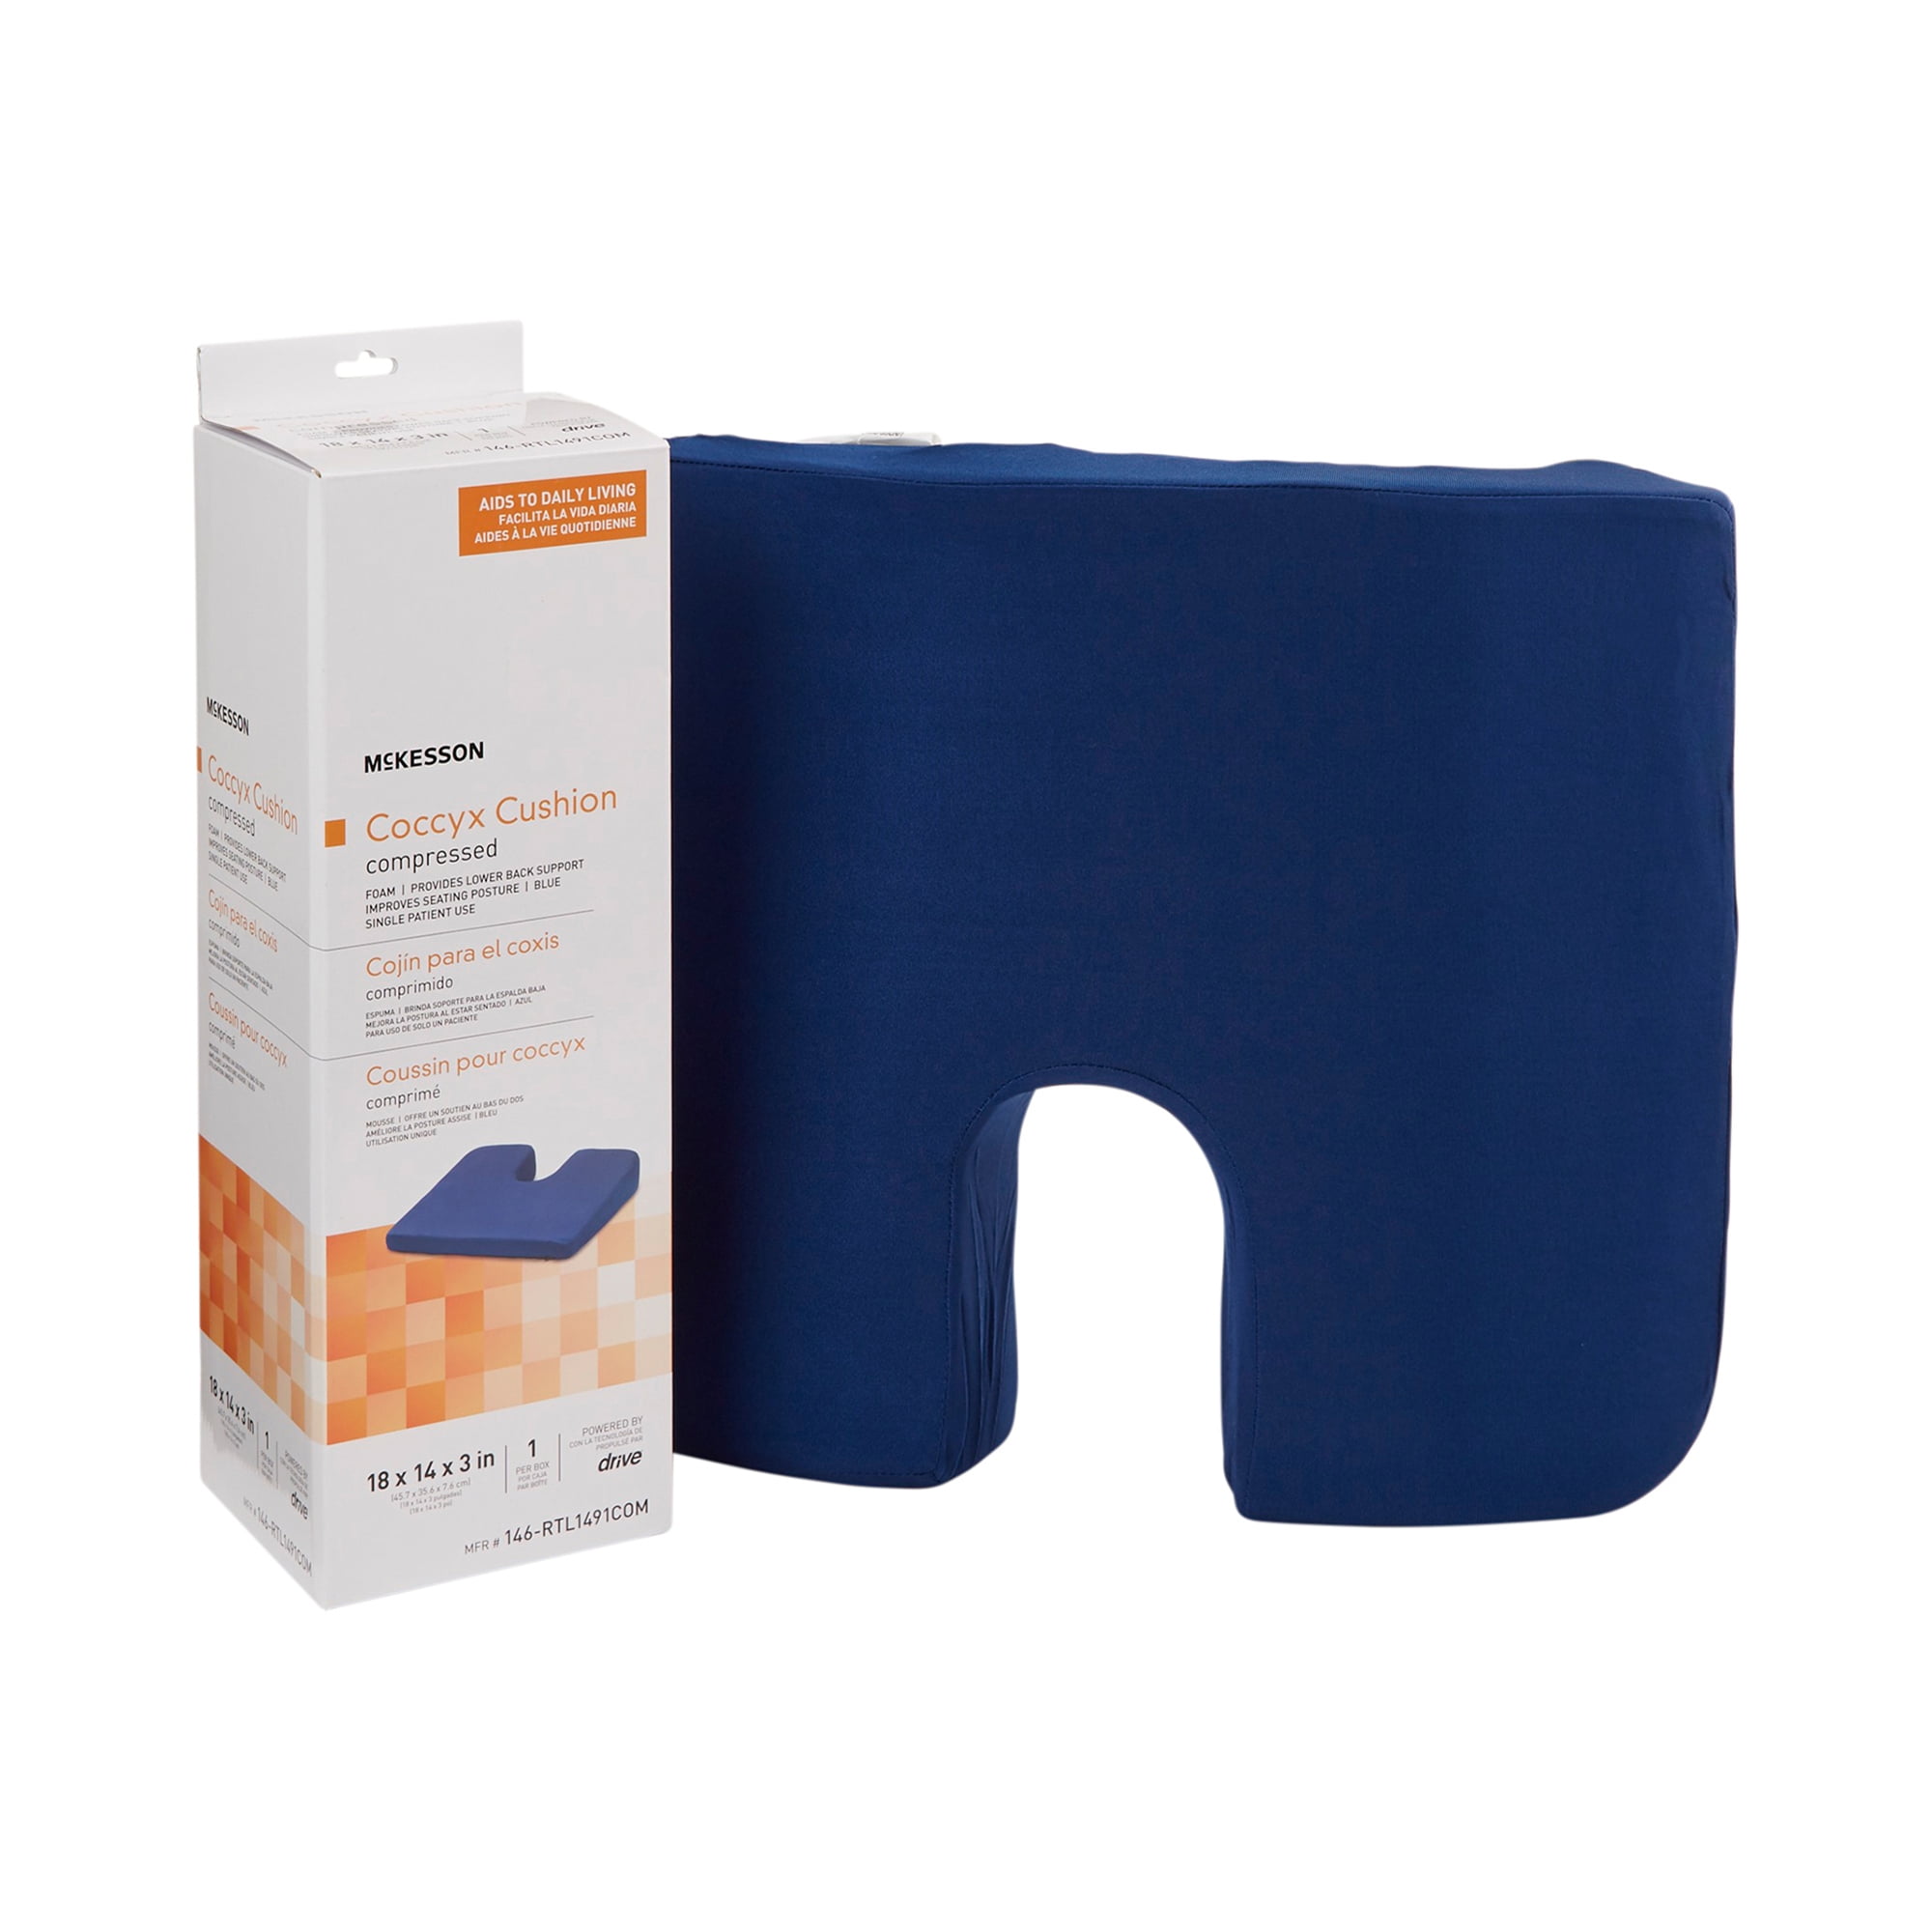 Walgreens Compressed Coccyx Cushion Pillow Blue – Soft Foam